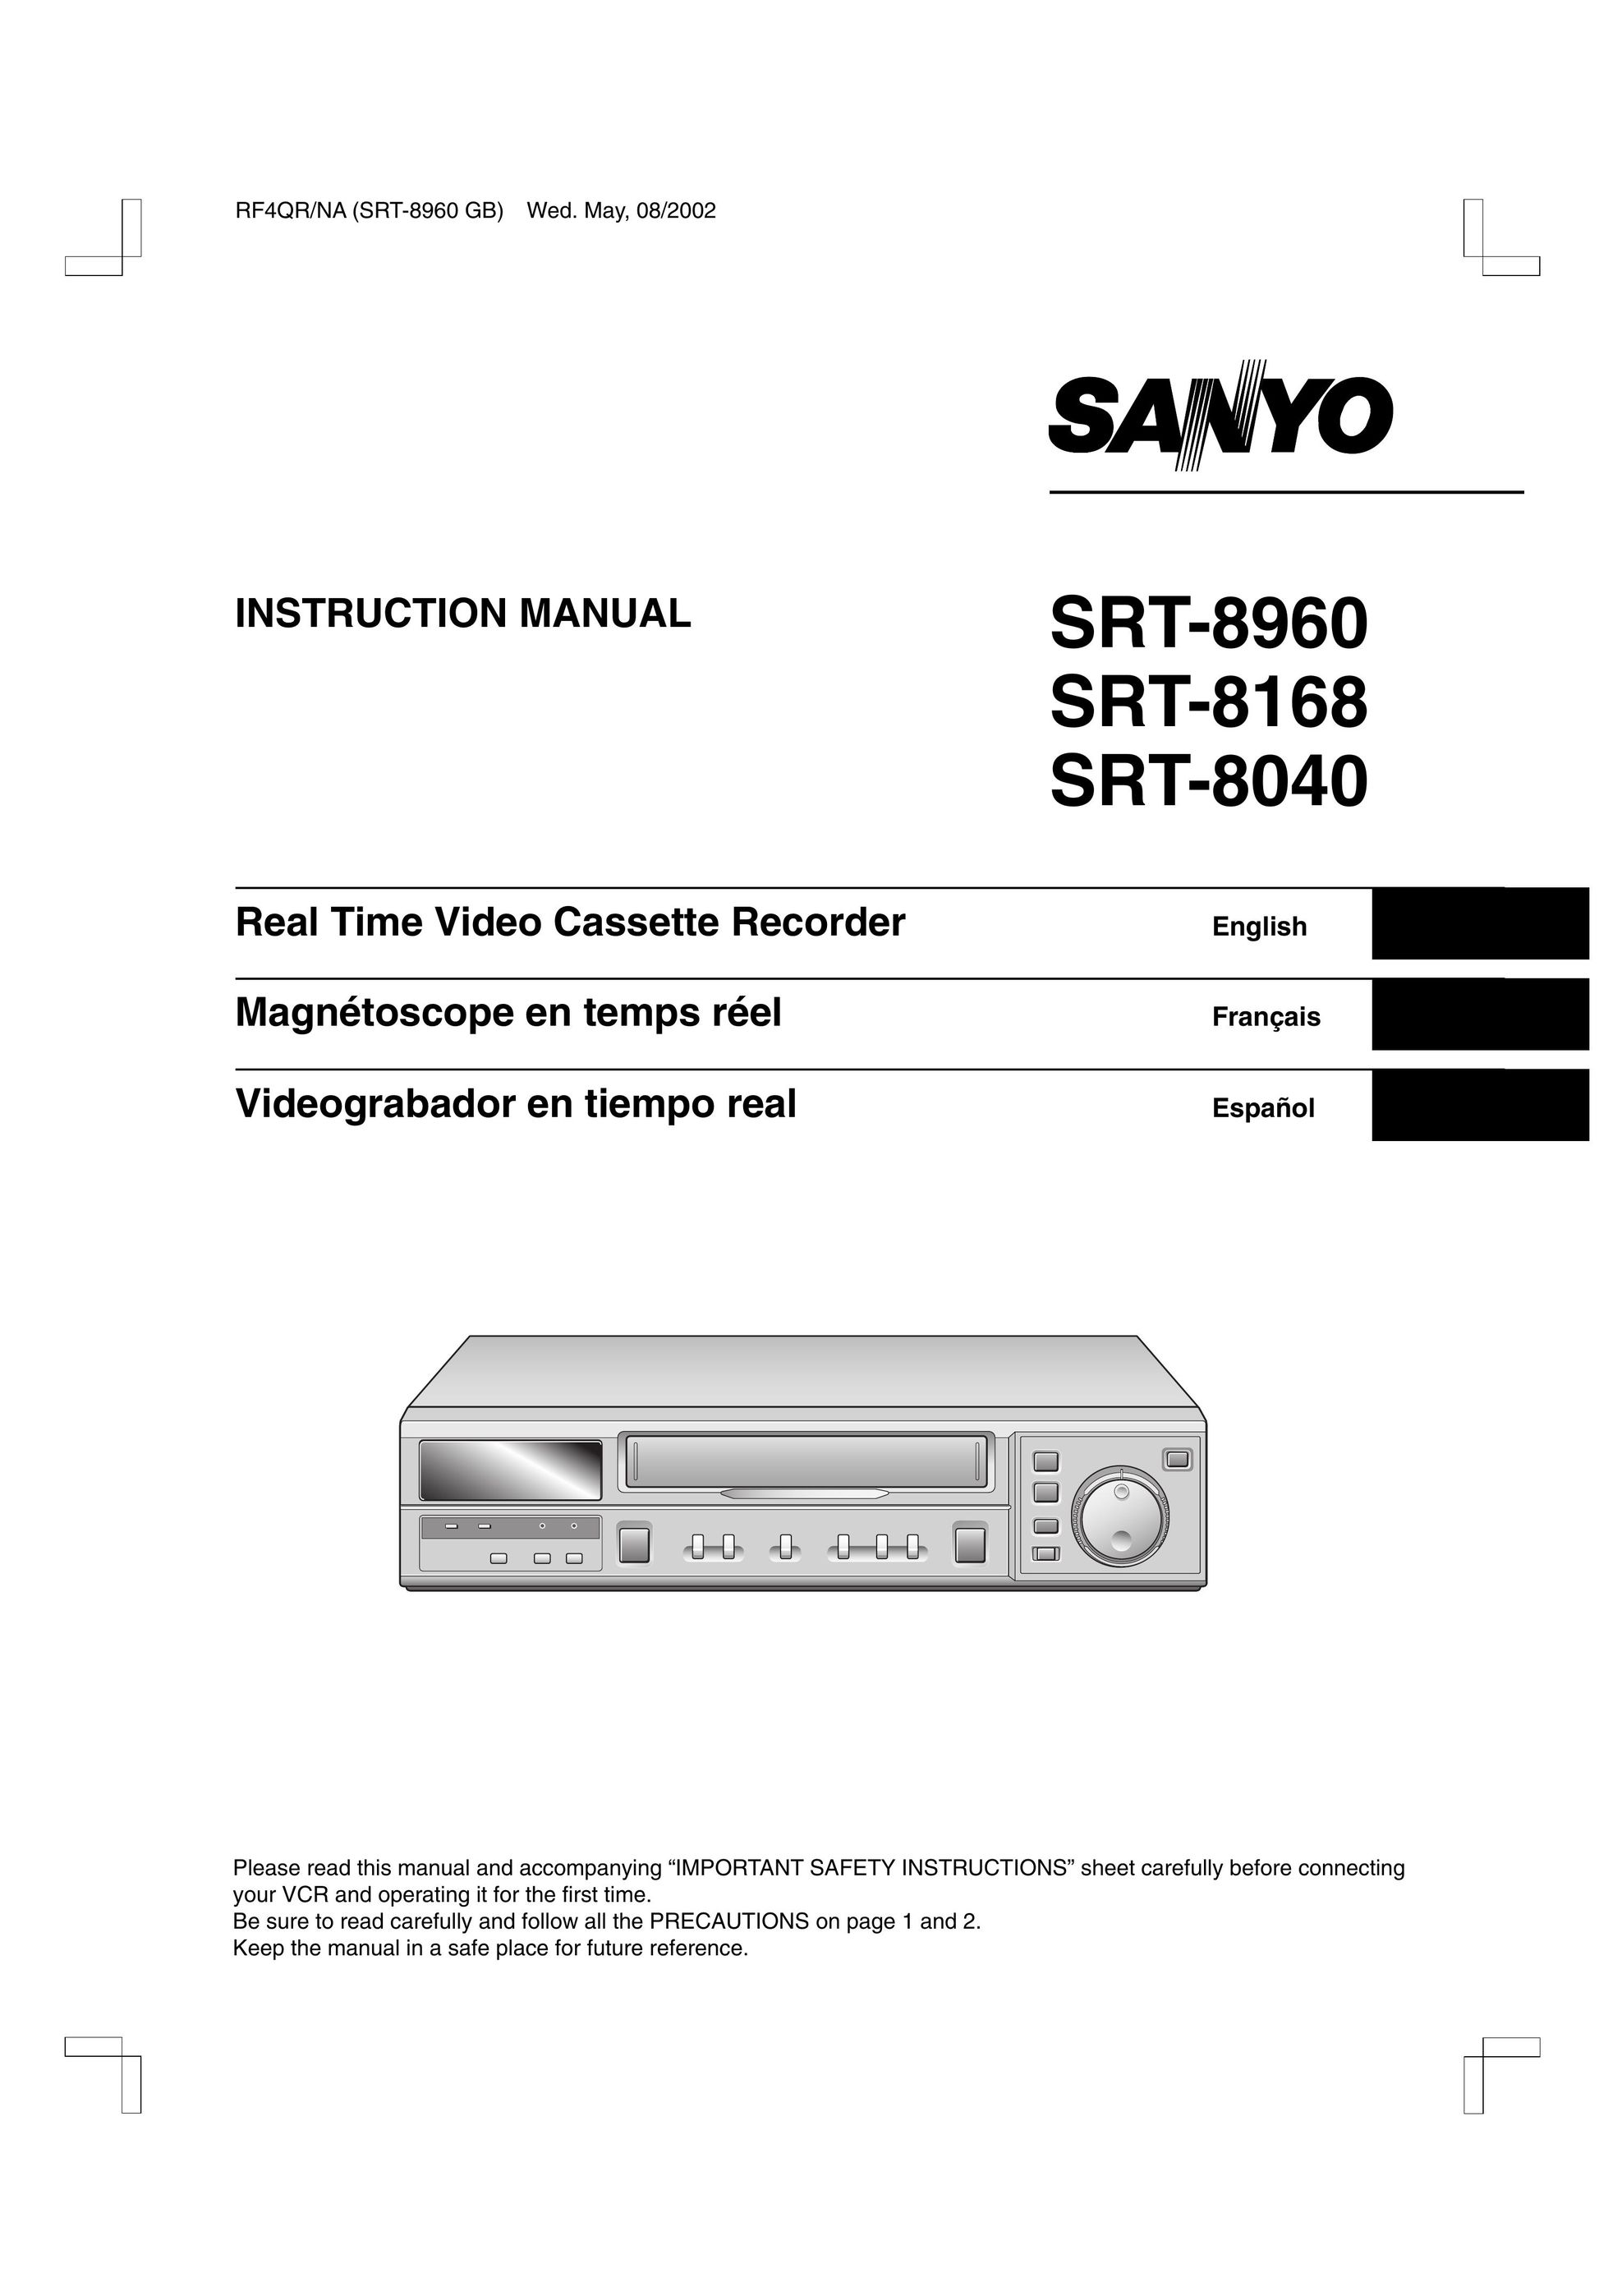 Sharp SRT-8168 VCR User Manual